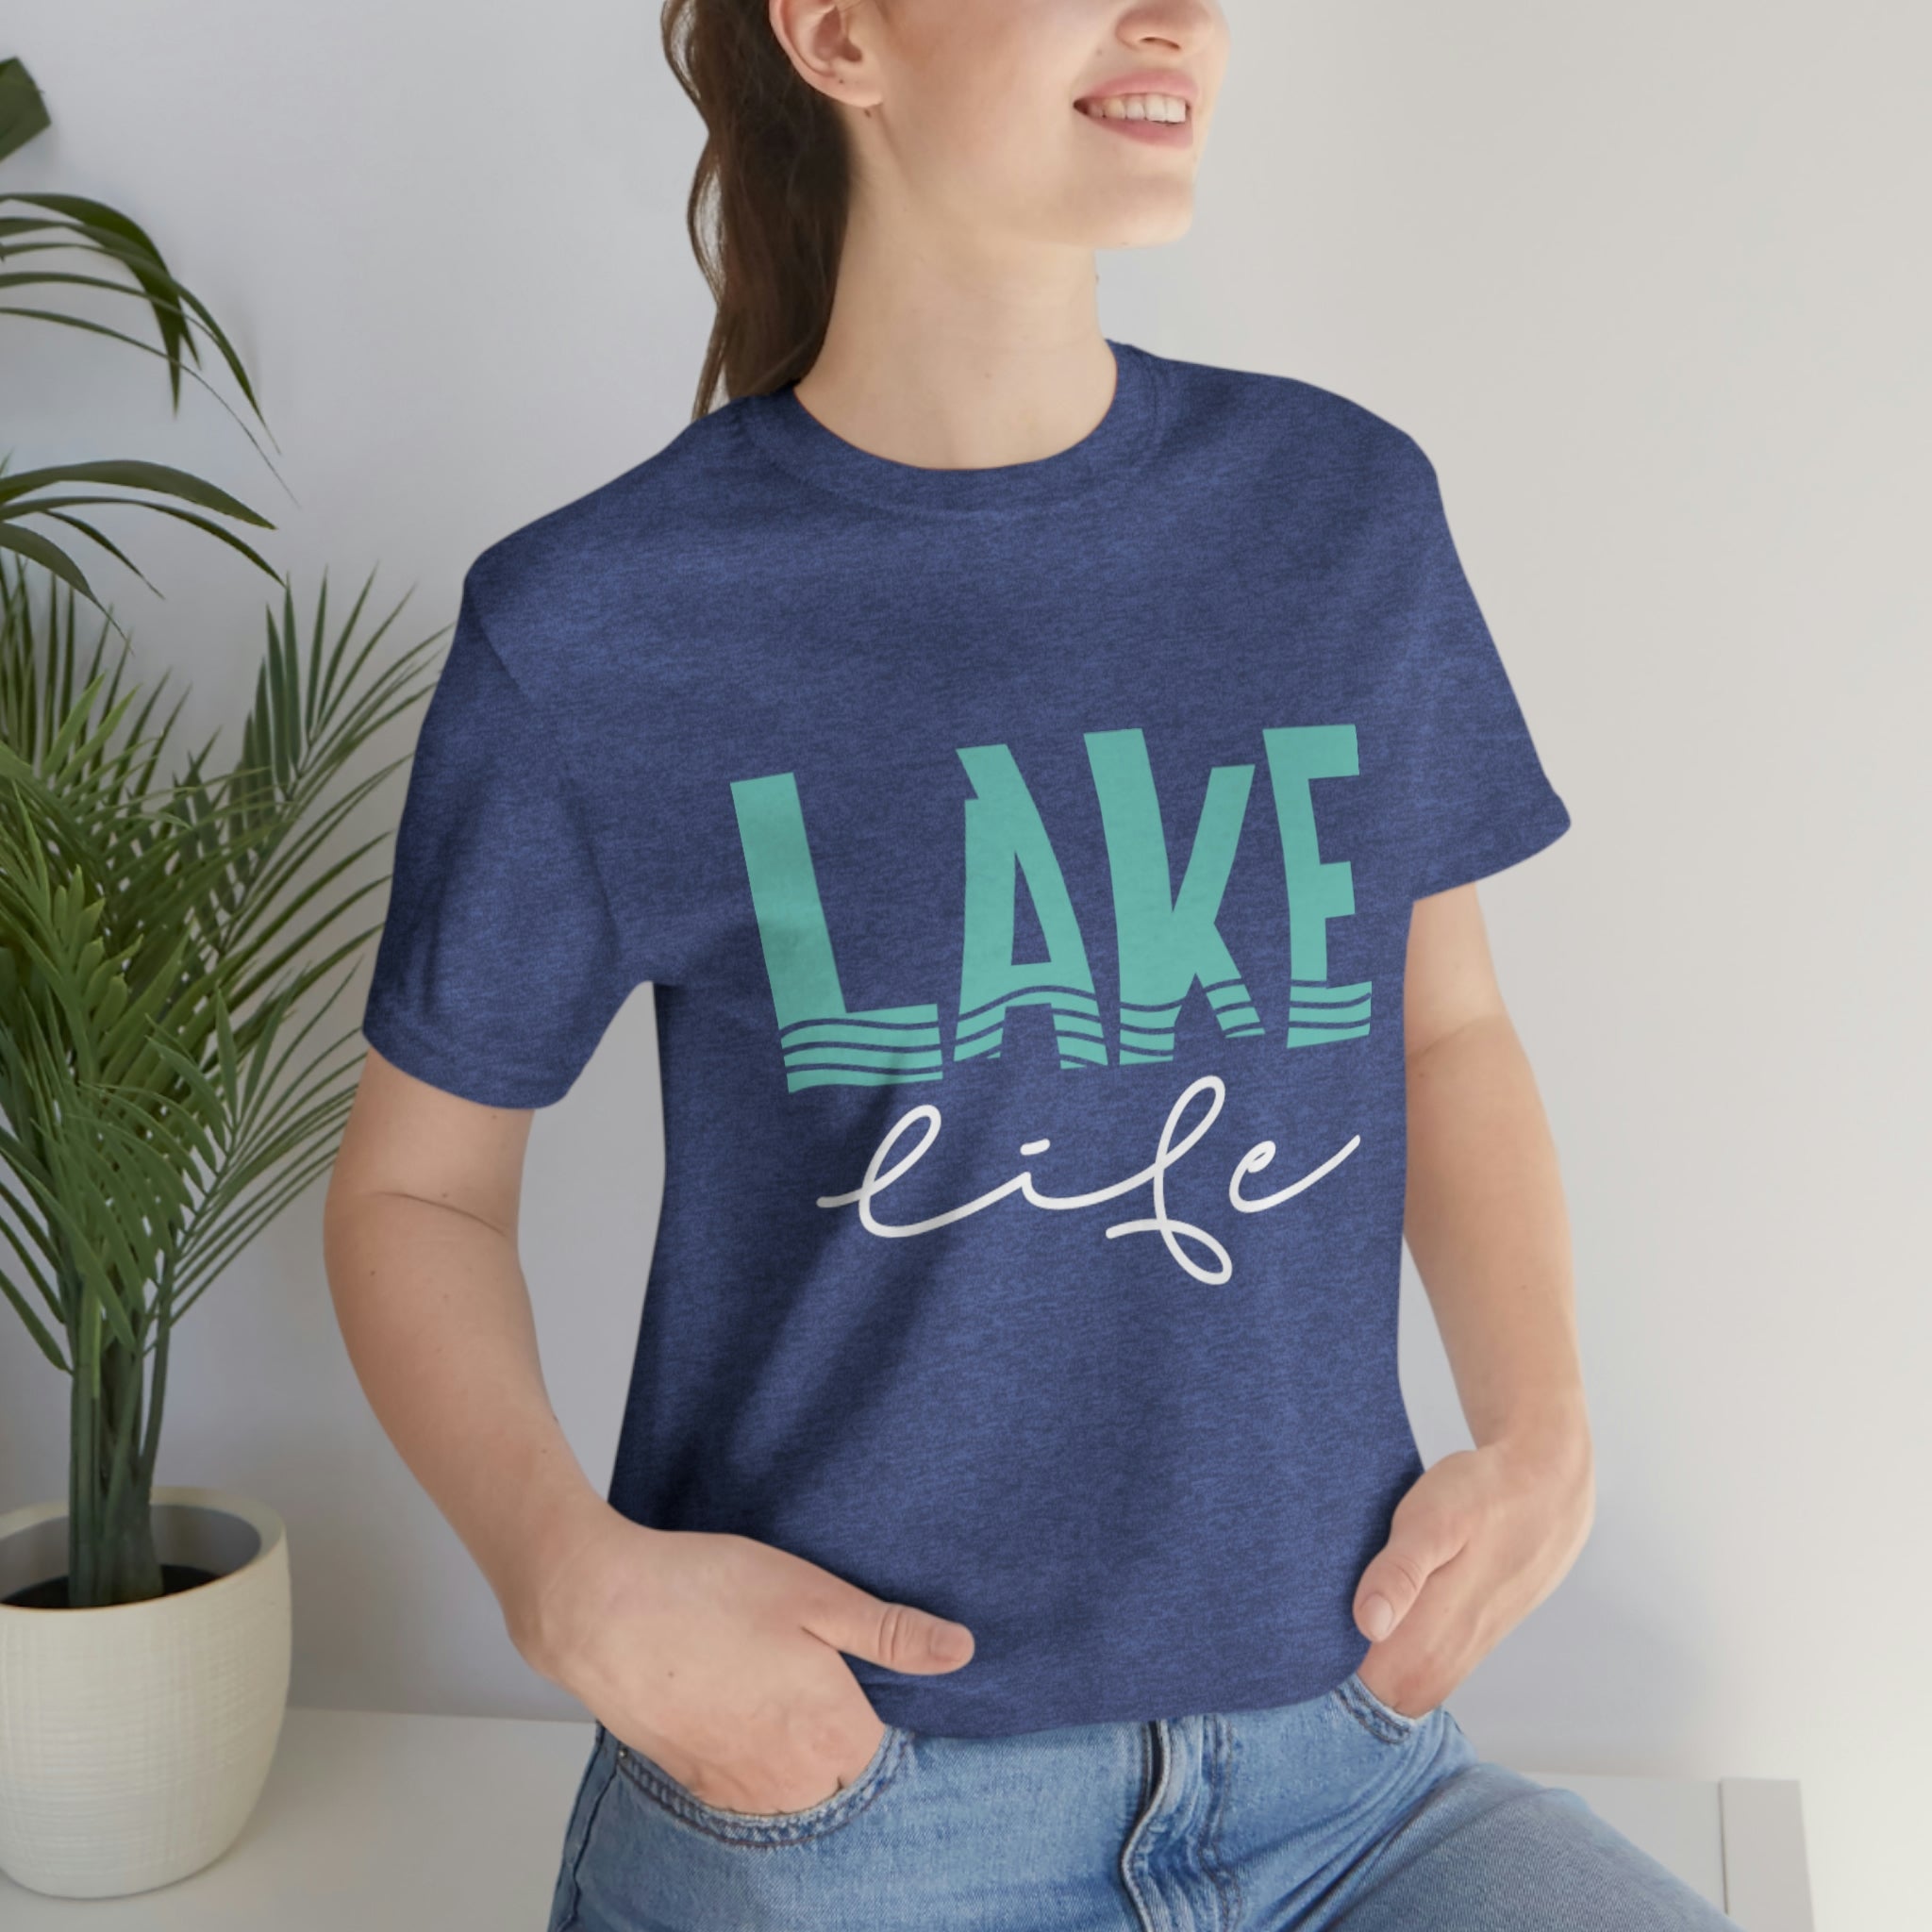 Lake Life Unisex Jersey Short Sleeve Tee